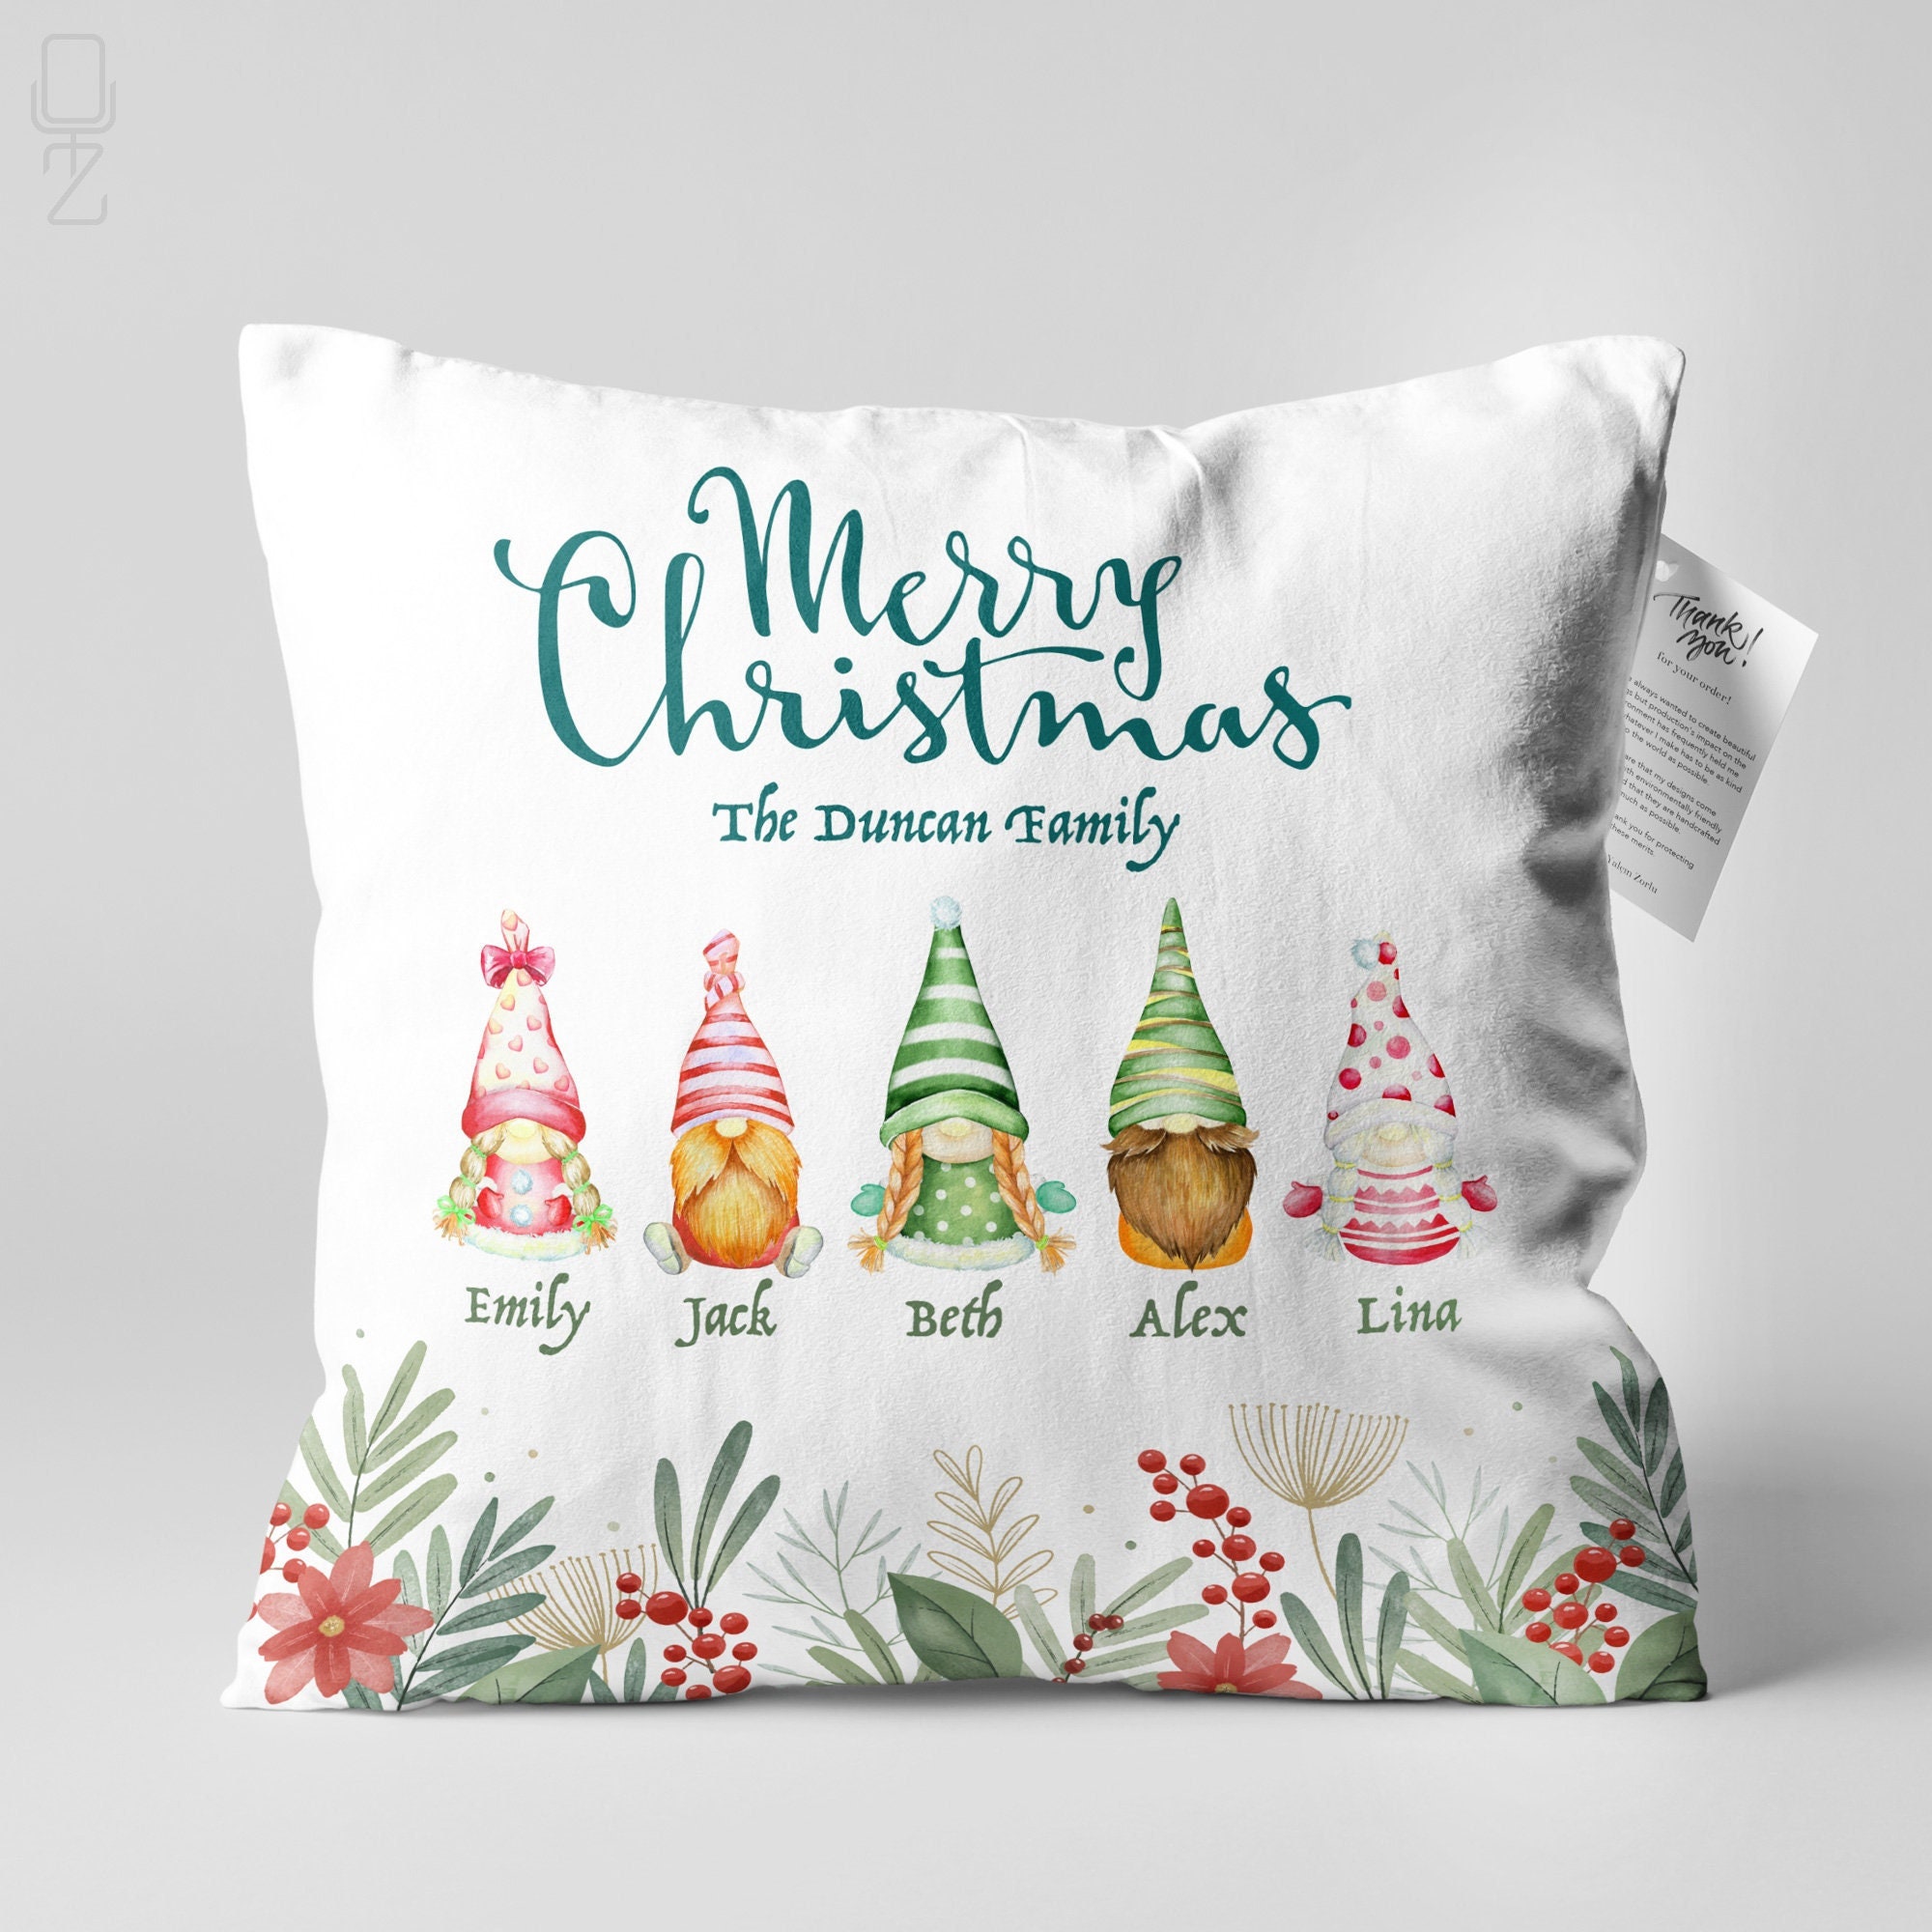 How to Turn Regular Pillows Into Christmas Pillows